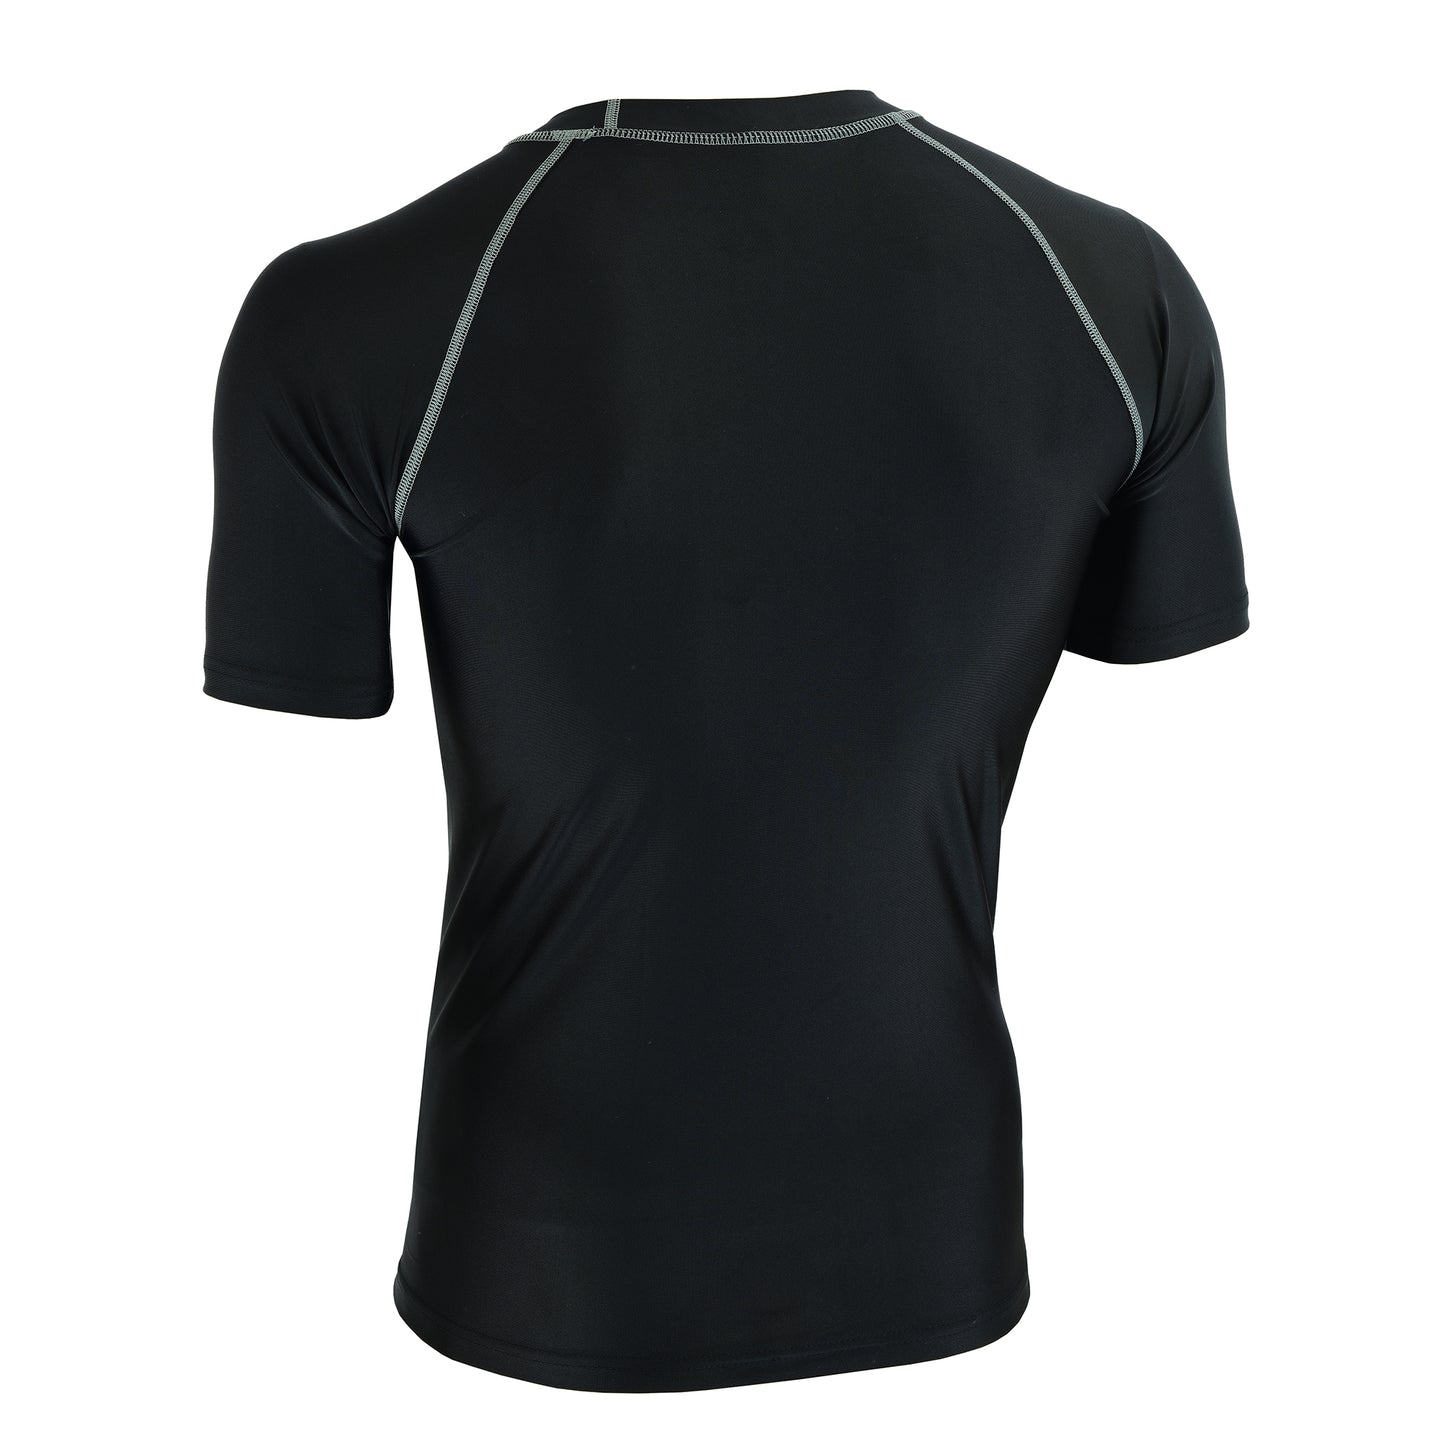 Men's Half Sleeve Compression T-Shirt Black & Grey